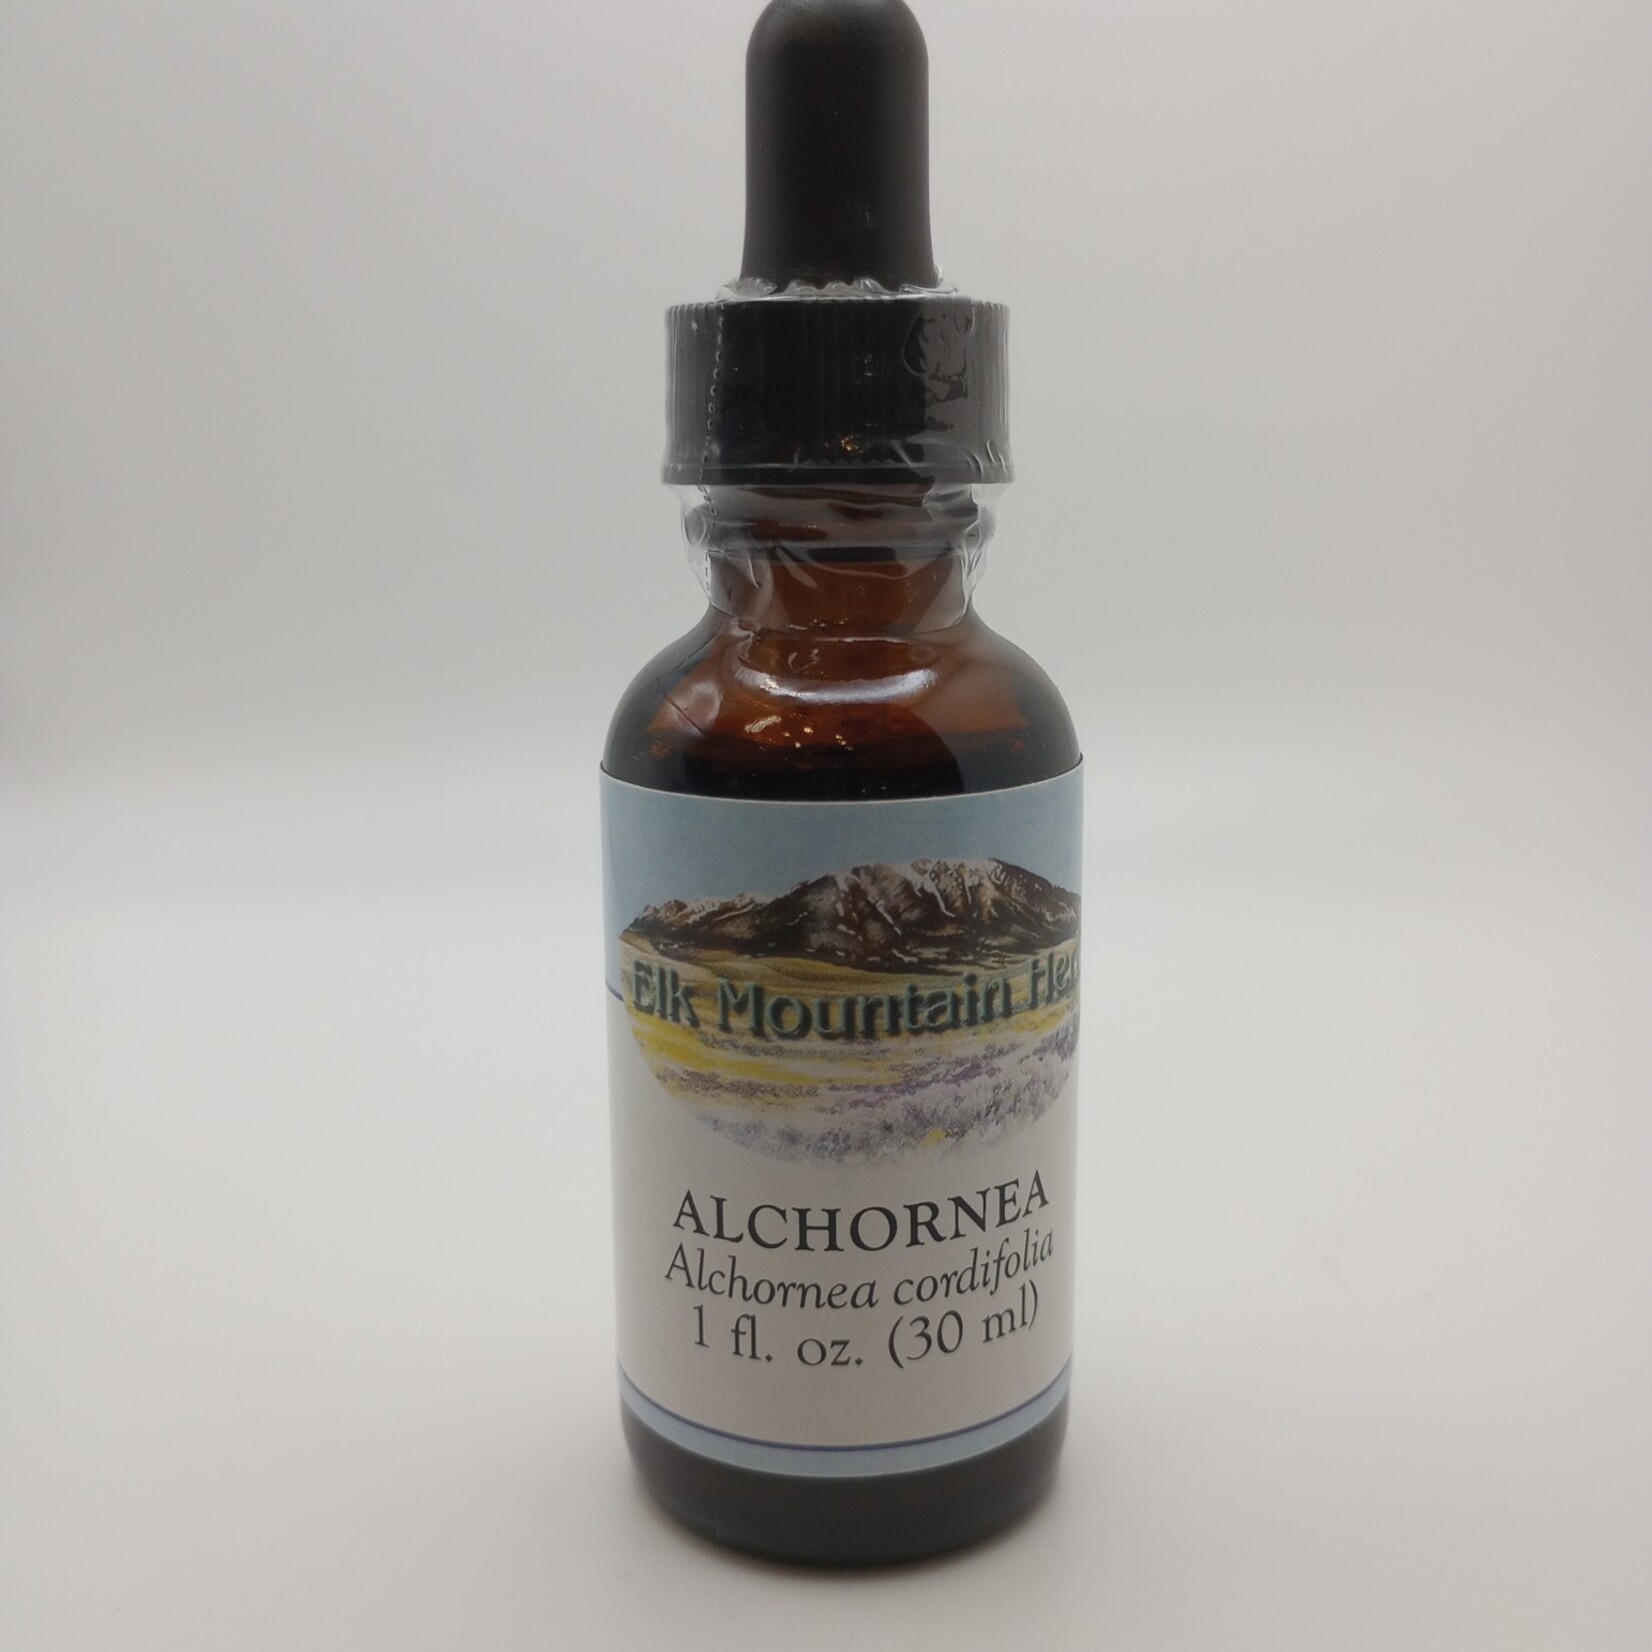 Elk Mountain Herbs EMH: Alchornea Tincture